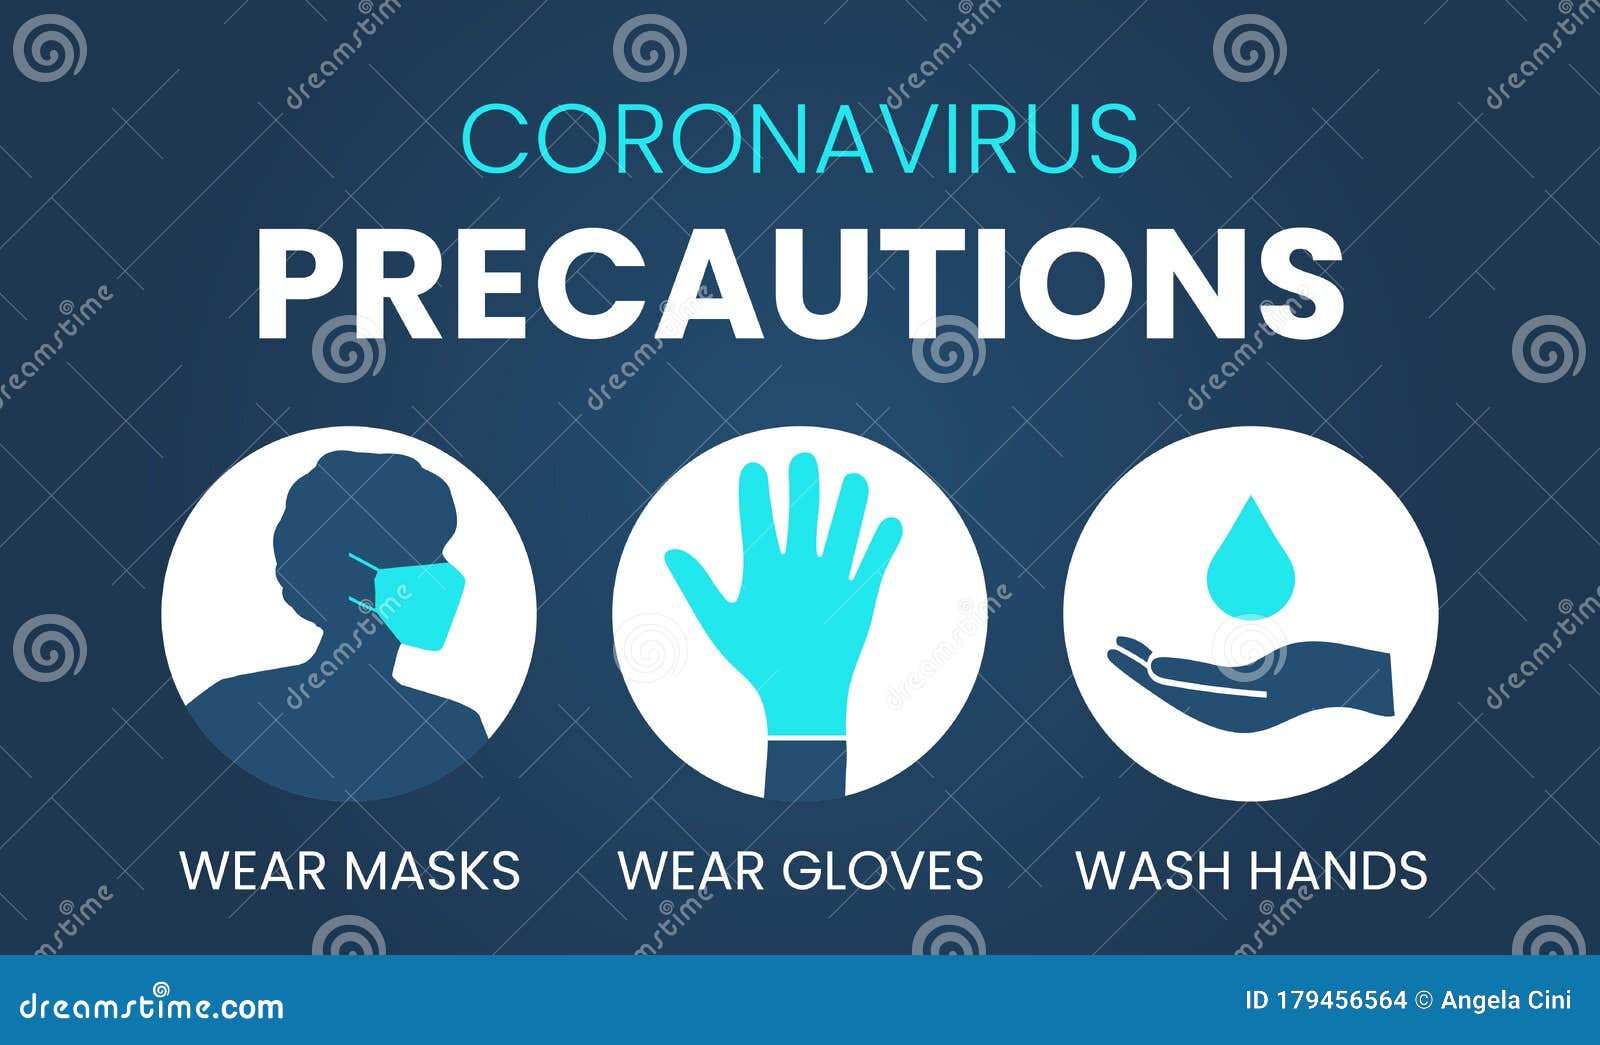 coronavirus precautions wear masks, gloves, wash hands 